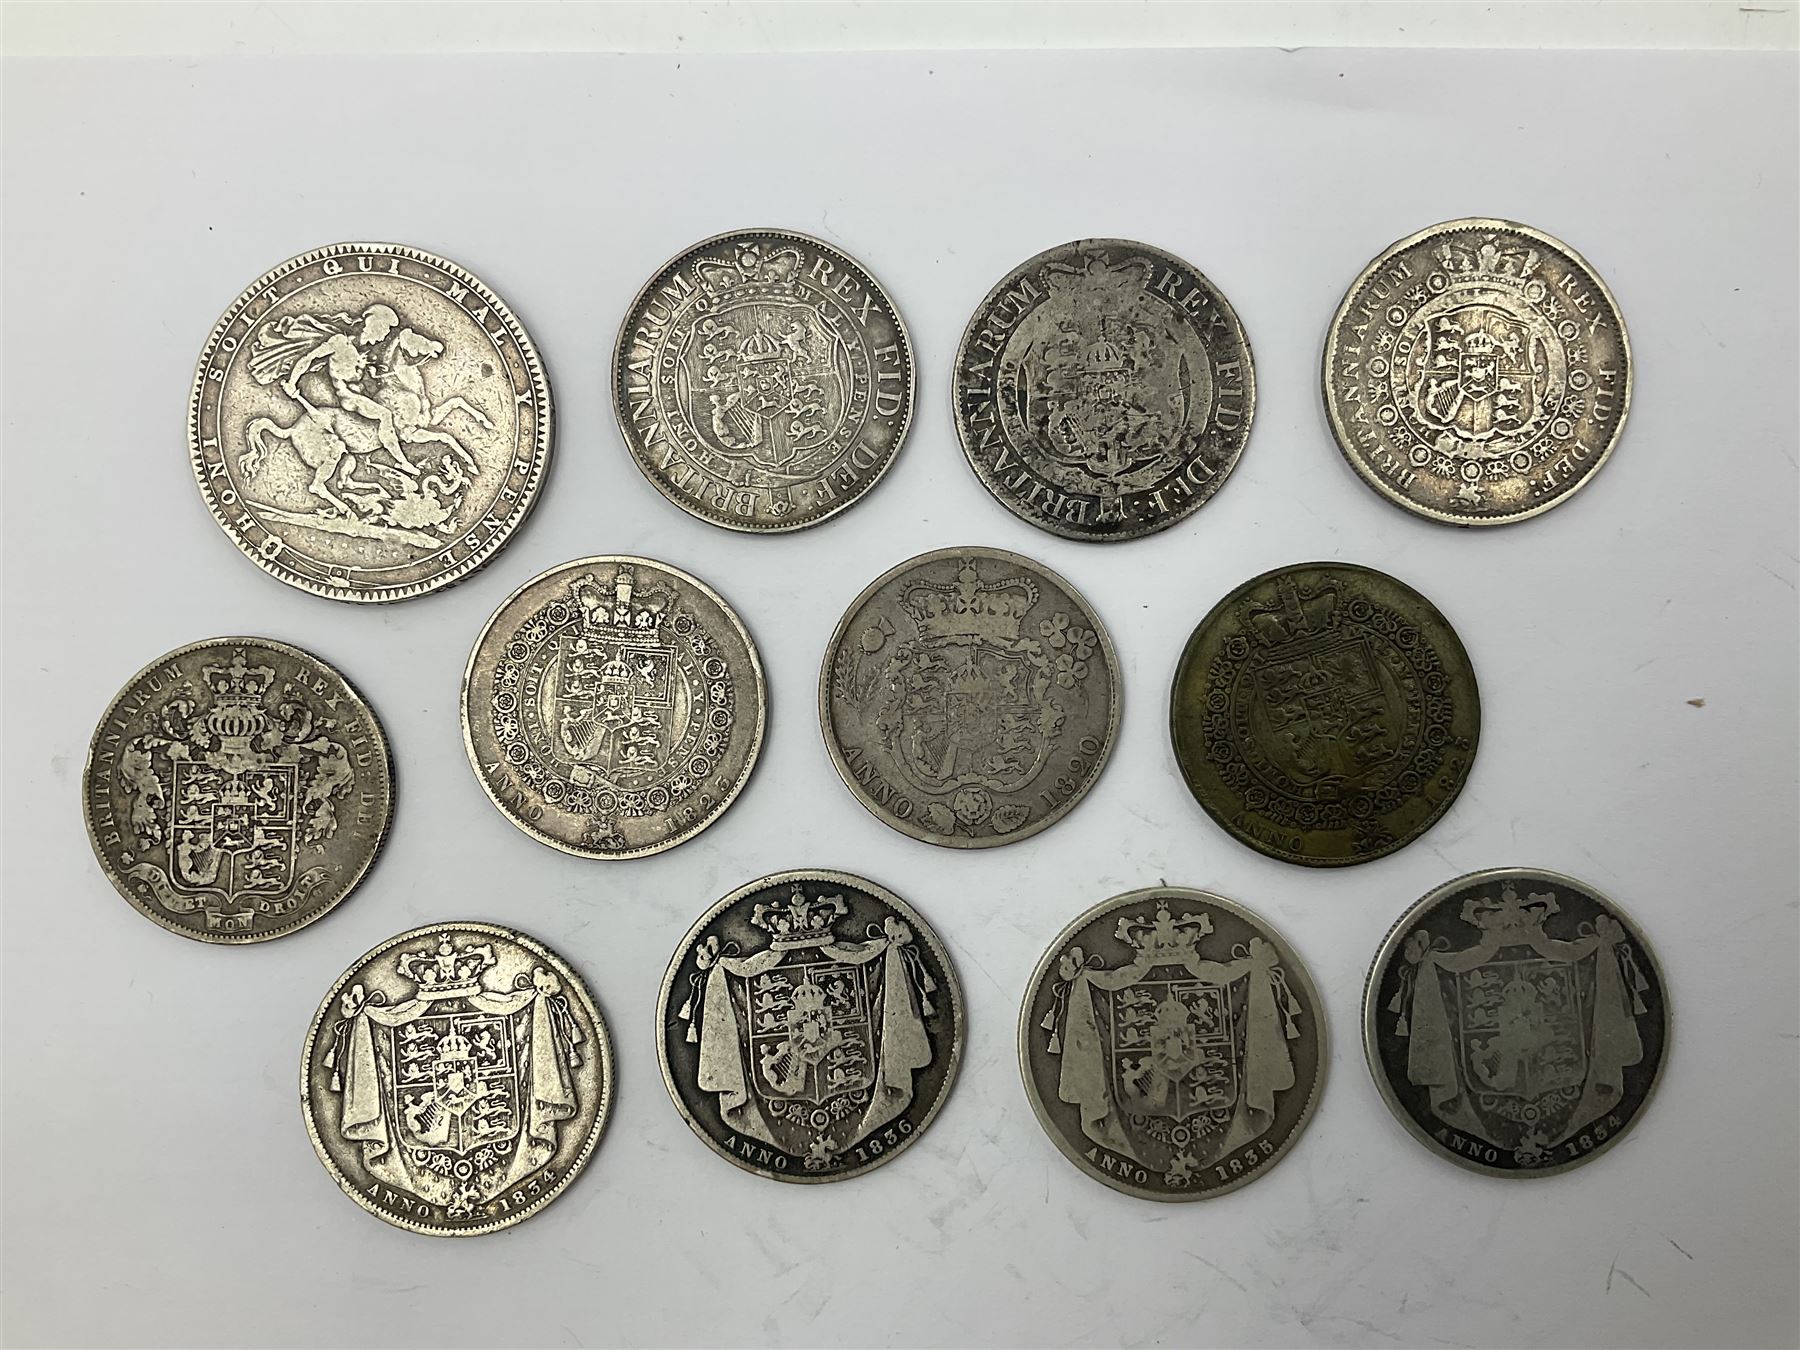 King George III 1819 silver crown coin with twelve half crowns of George III - Image 3 of 3